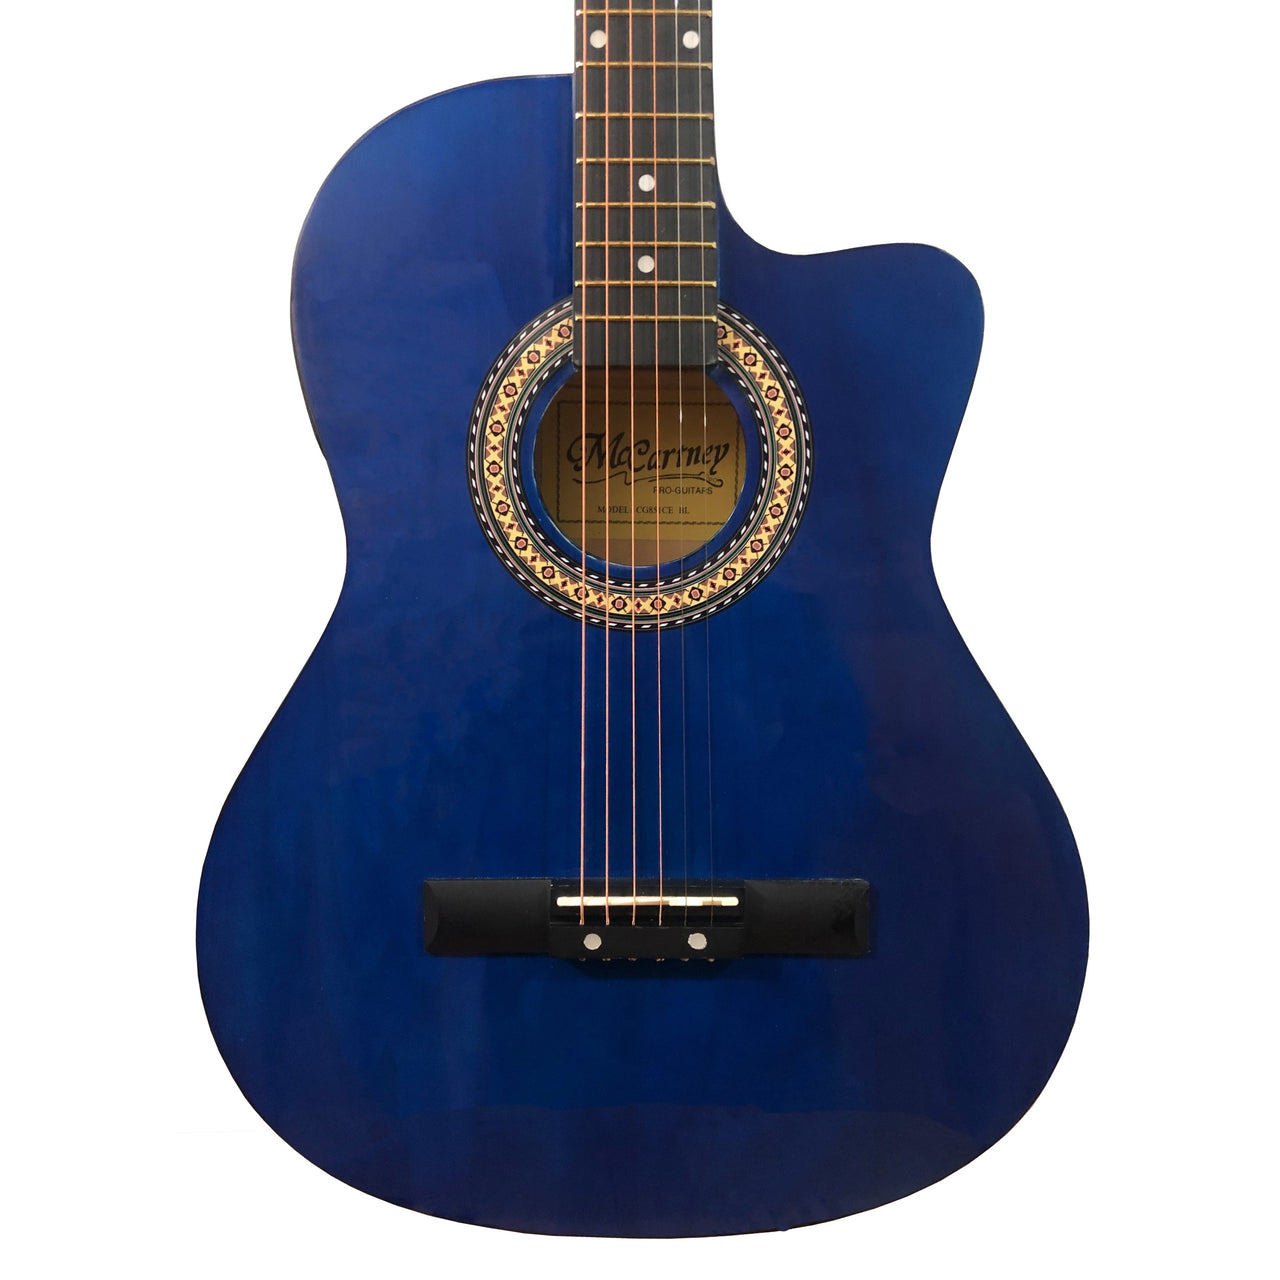 Guitarra Electroacustica Mc Cartney Cg-851-eq-bl Cuerdas De Acero Azul